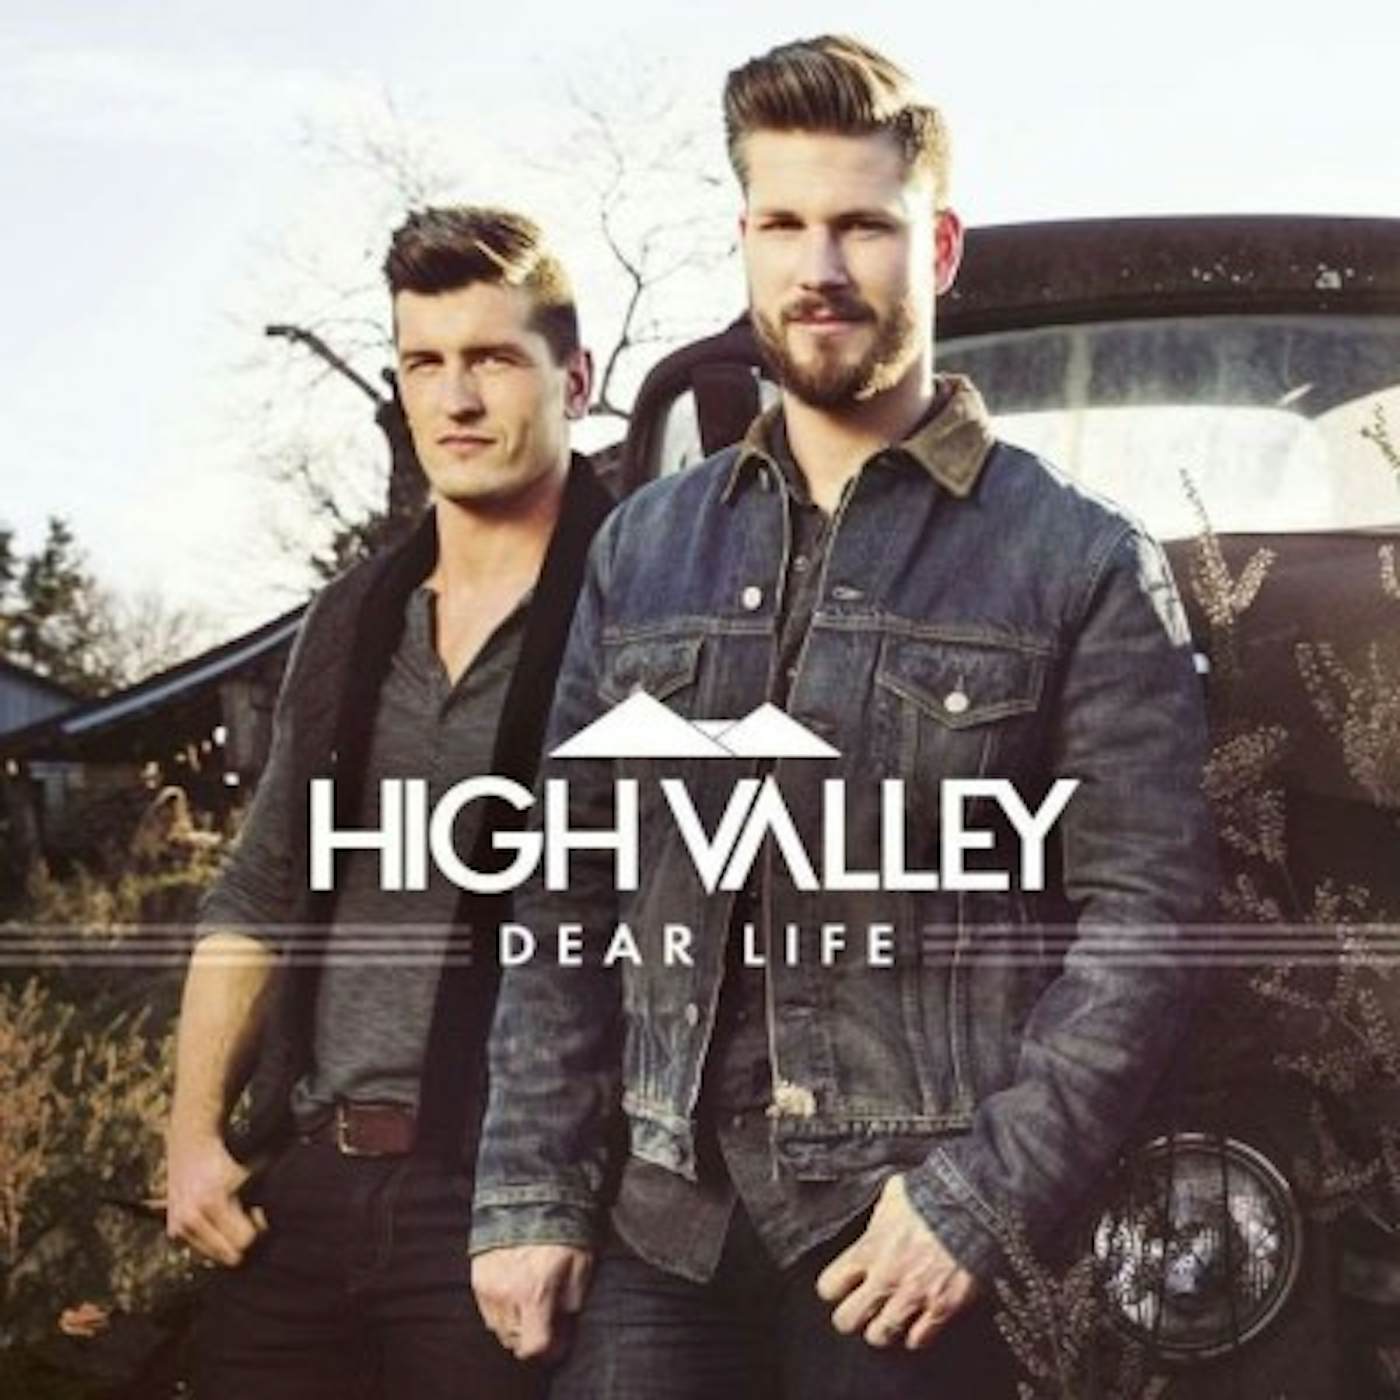 High Valley Dear Life CD